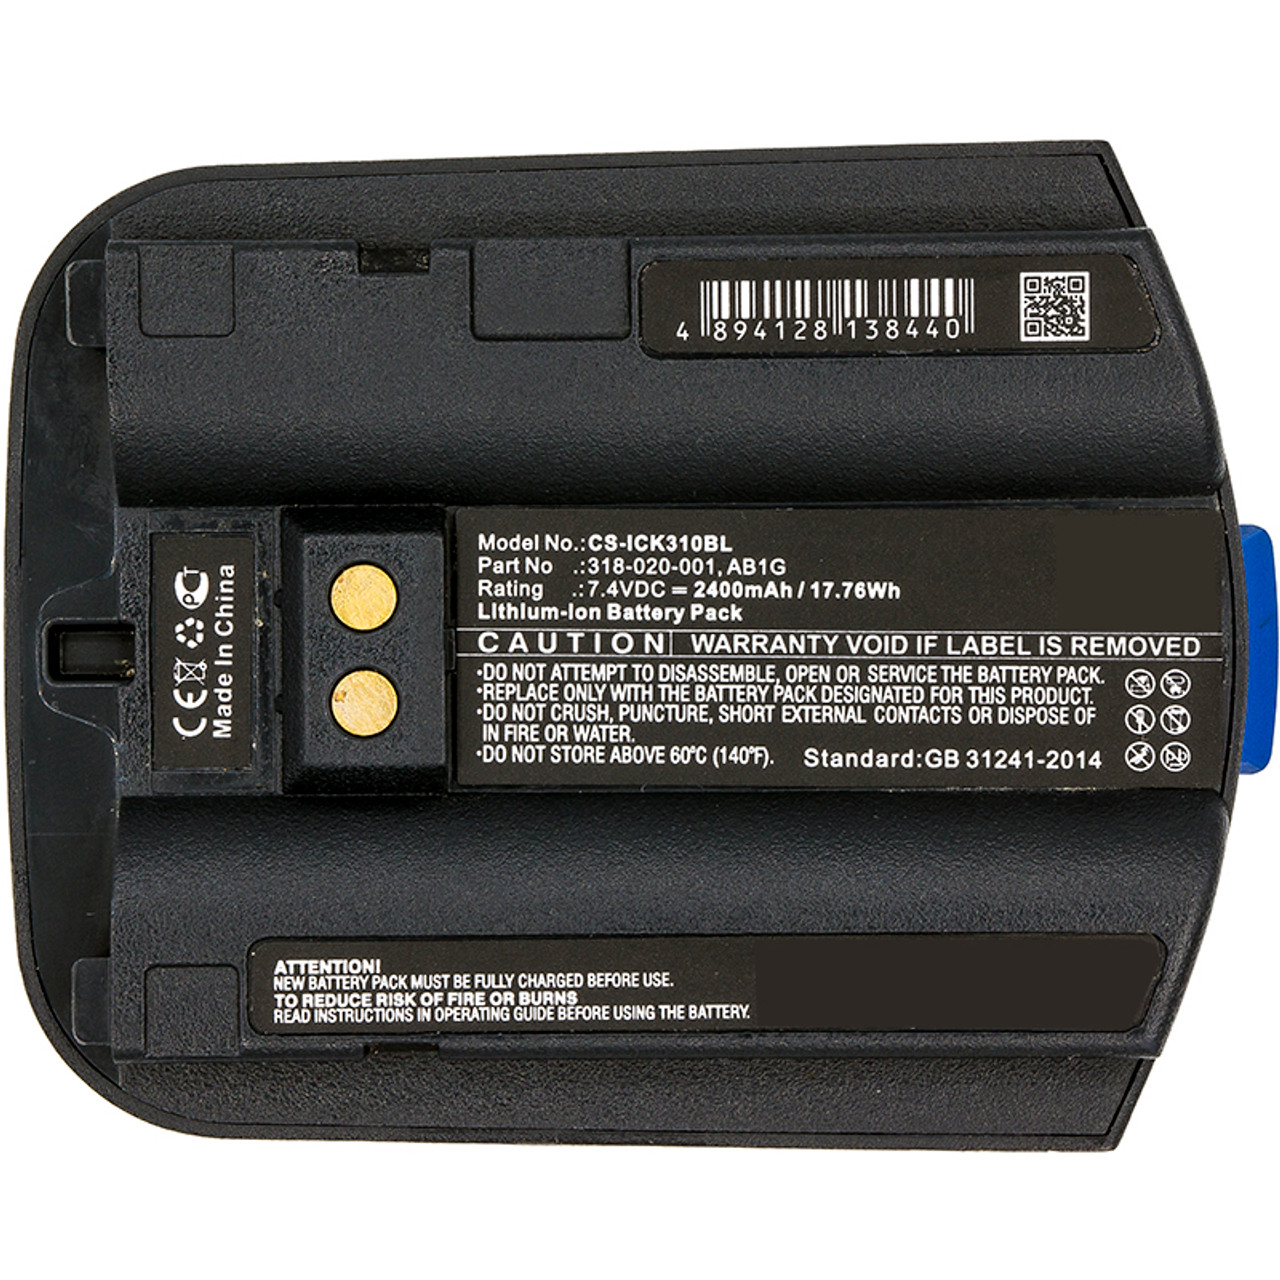 Intermec A1168000 Personal Data Terminal Portable Bar Code Scanner Battery